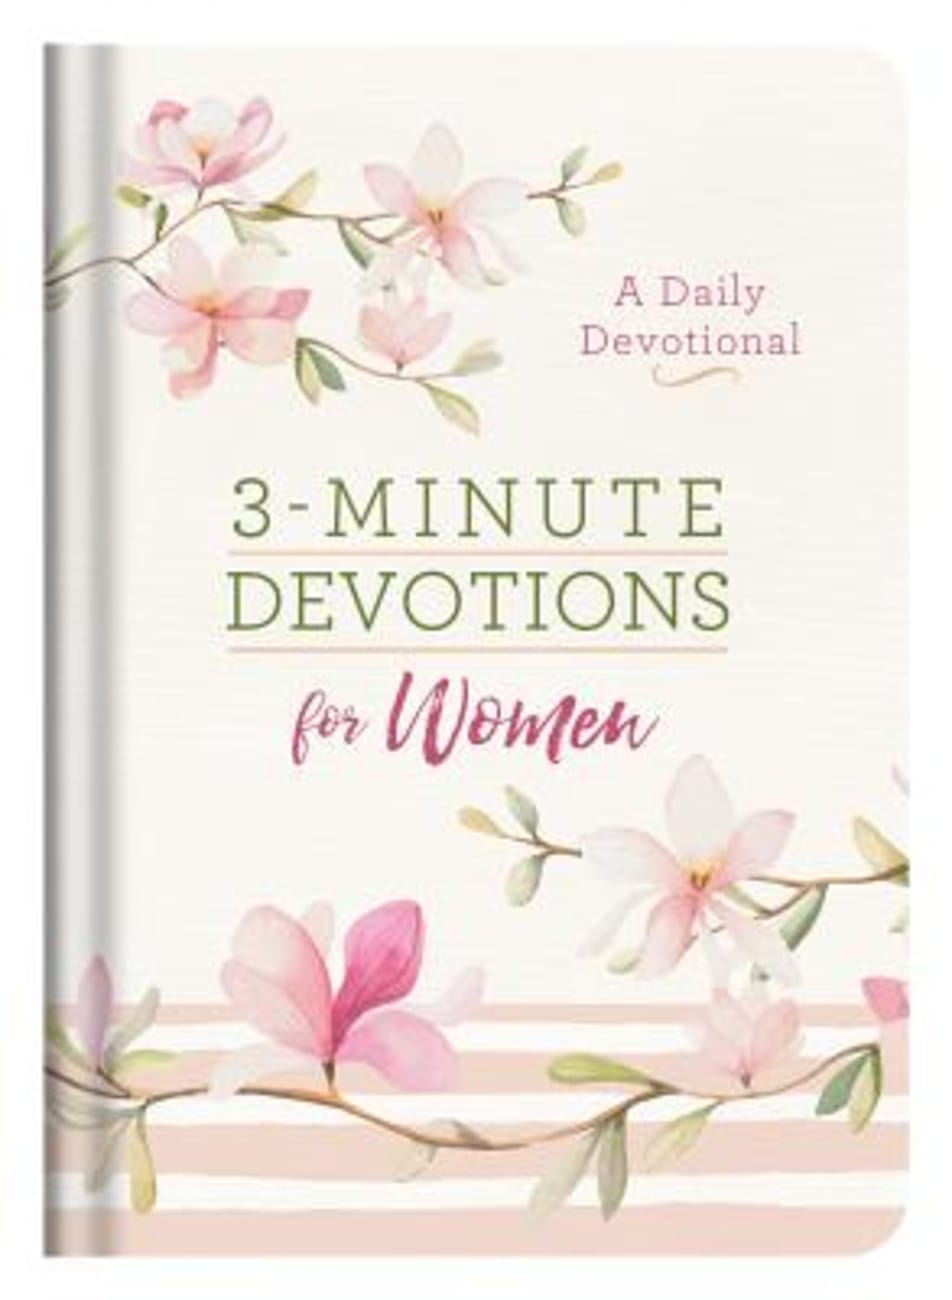 3md: For Women - a Daily Devotional Hardback